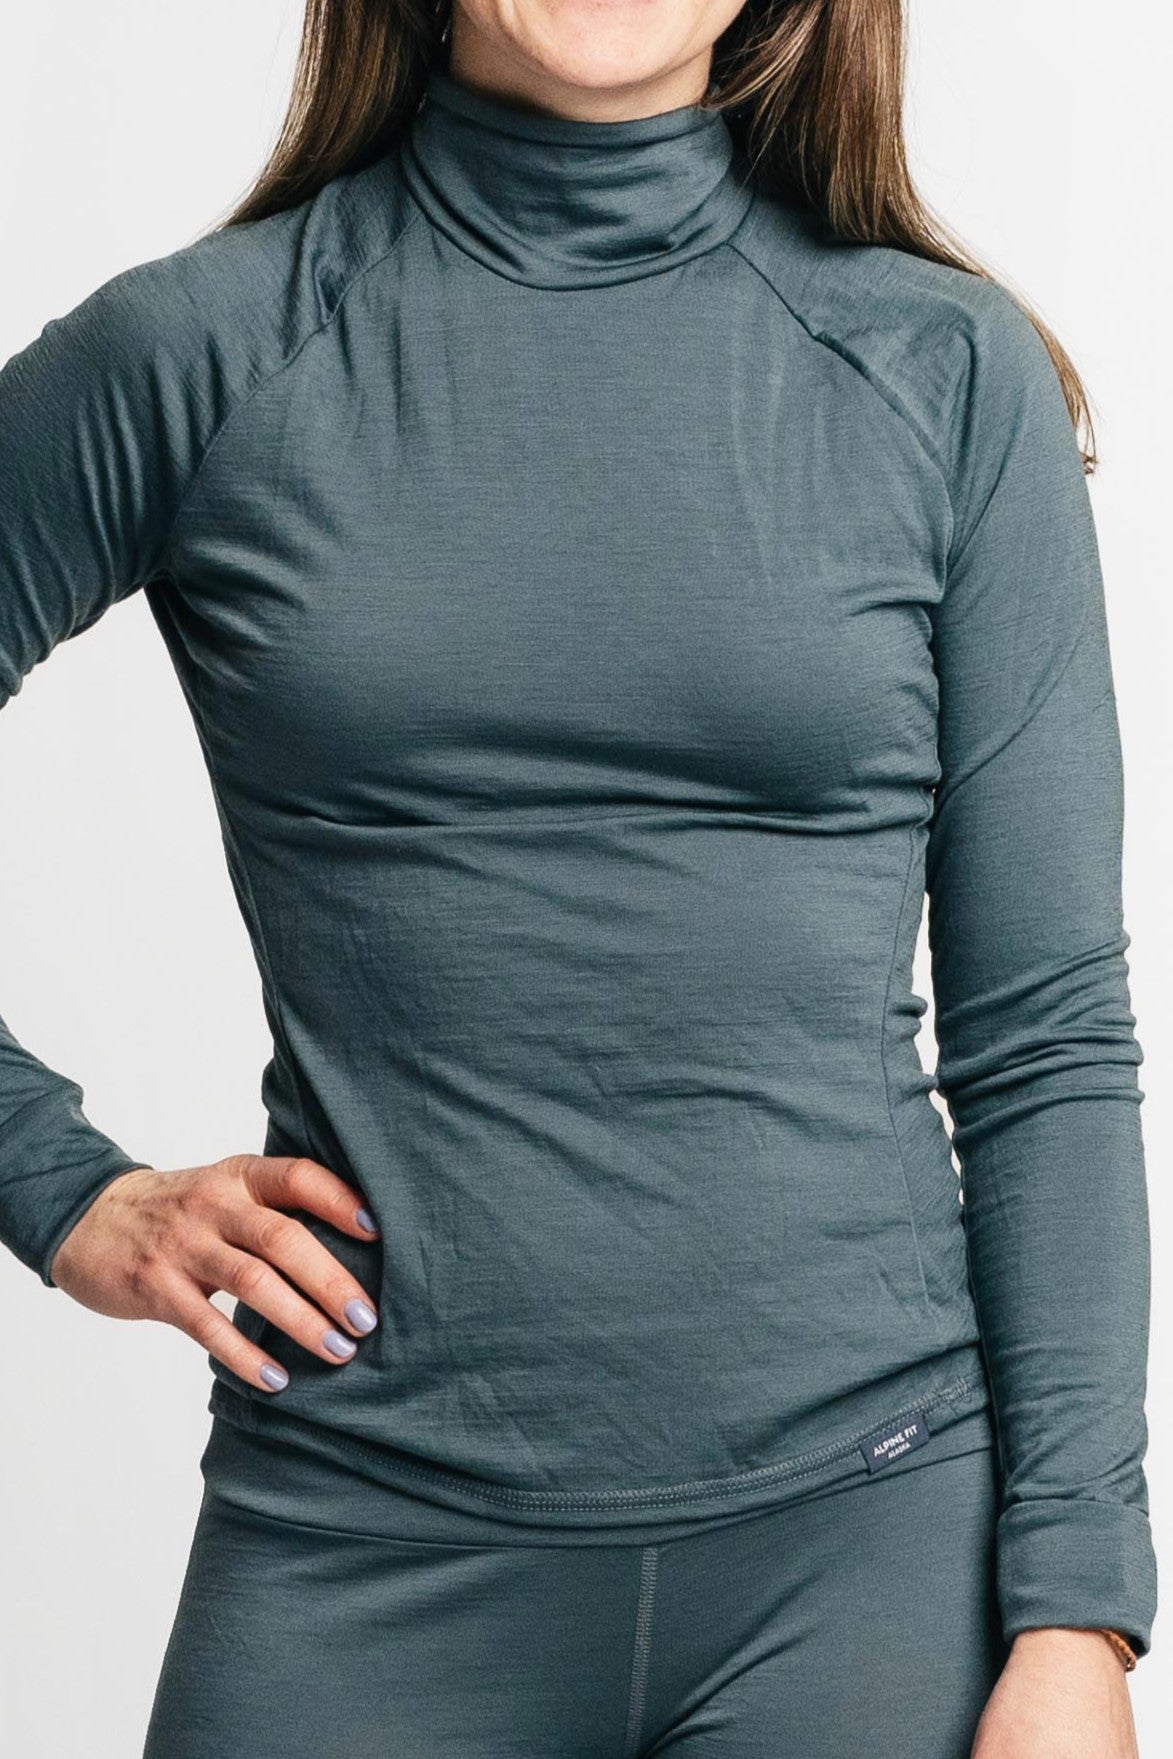 Women 100% Merino Wool Base Layer Shirt Winter Thermal Underwear Crew Neck  Top